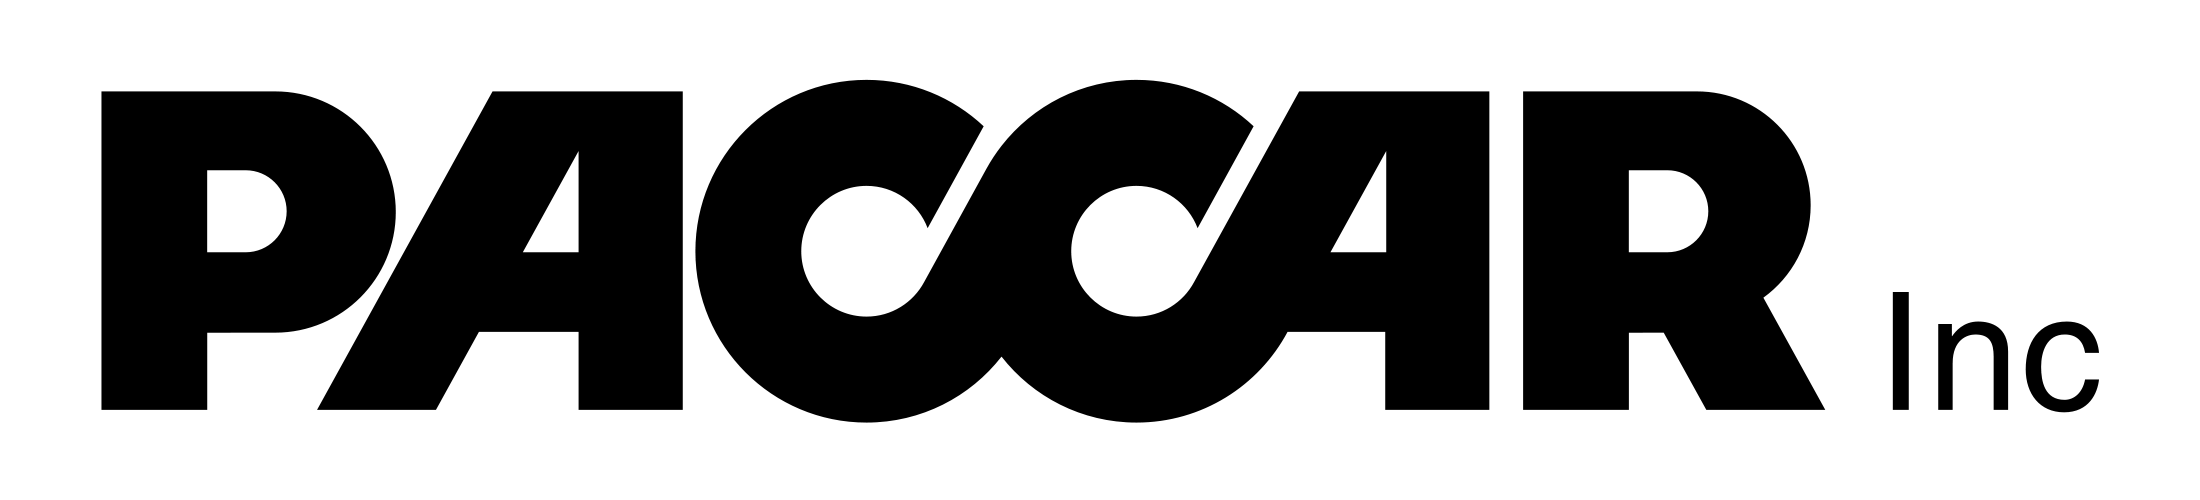 PACCAR Logo - Paccar Logo, HD Png, Information | Carlogos.org